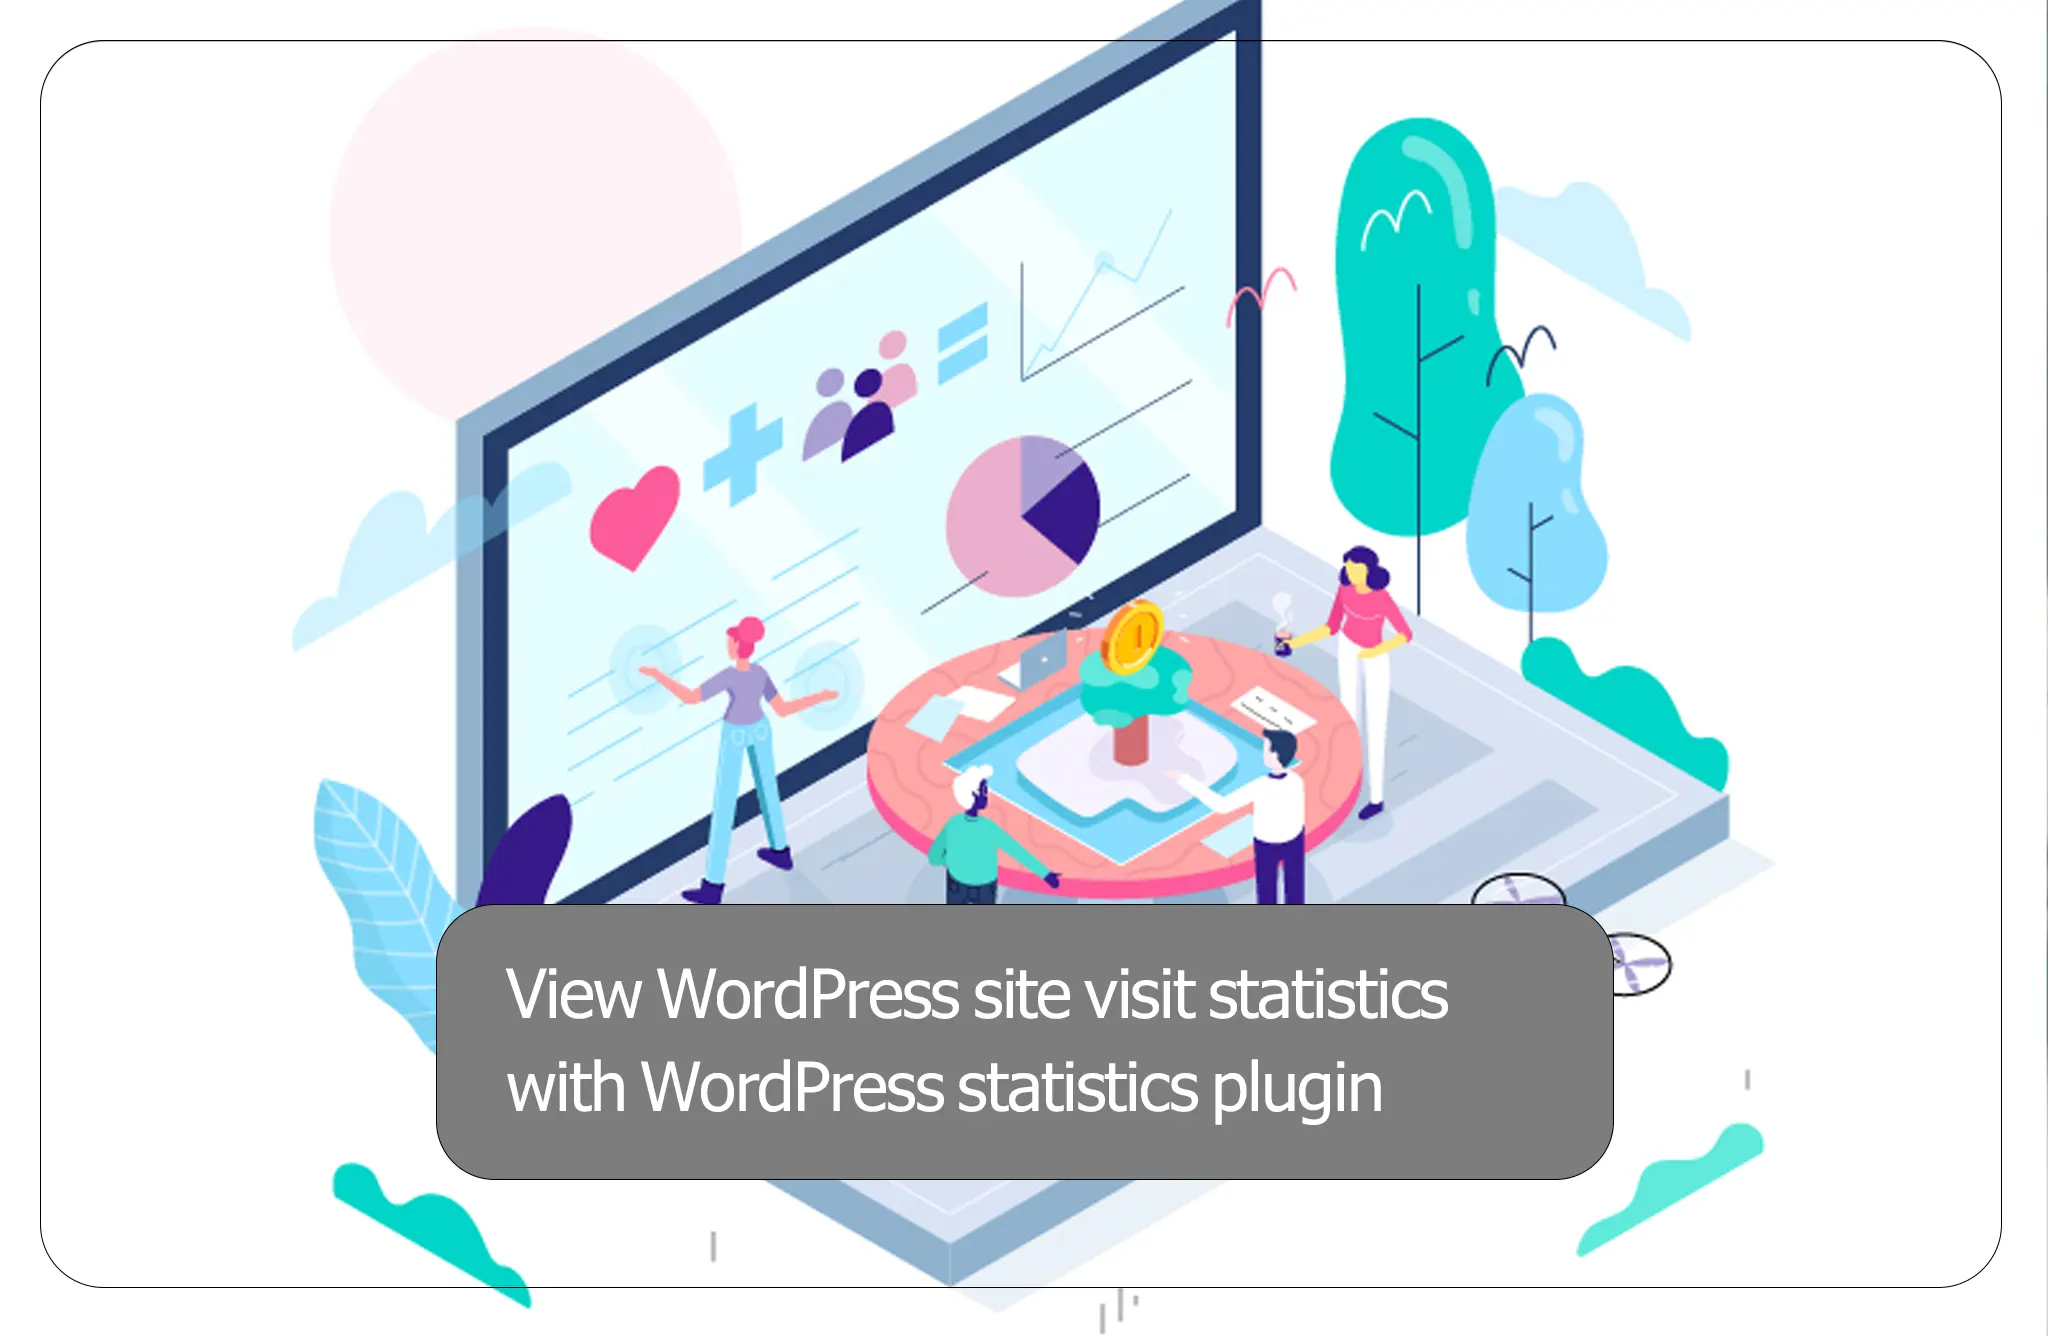 View WordPress site visit statistics with WordPress statistics plugin